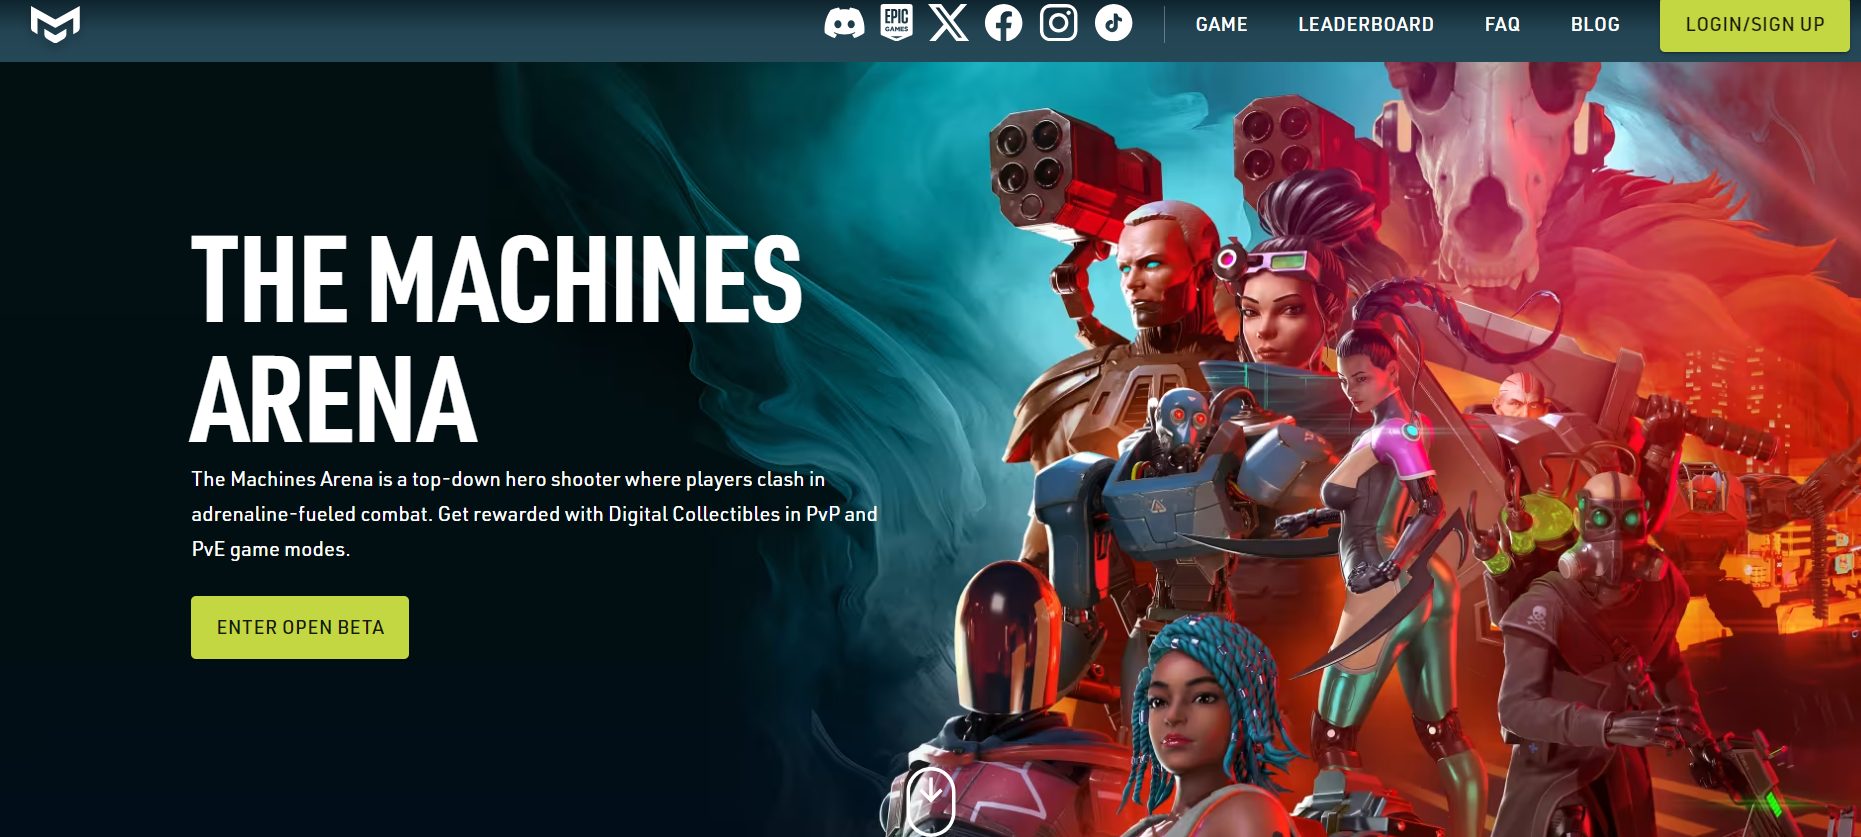 The Machines Arena: Připojte se k otevřené beta verzi